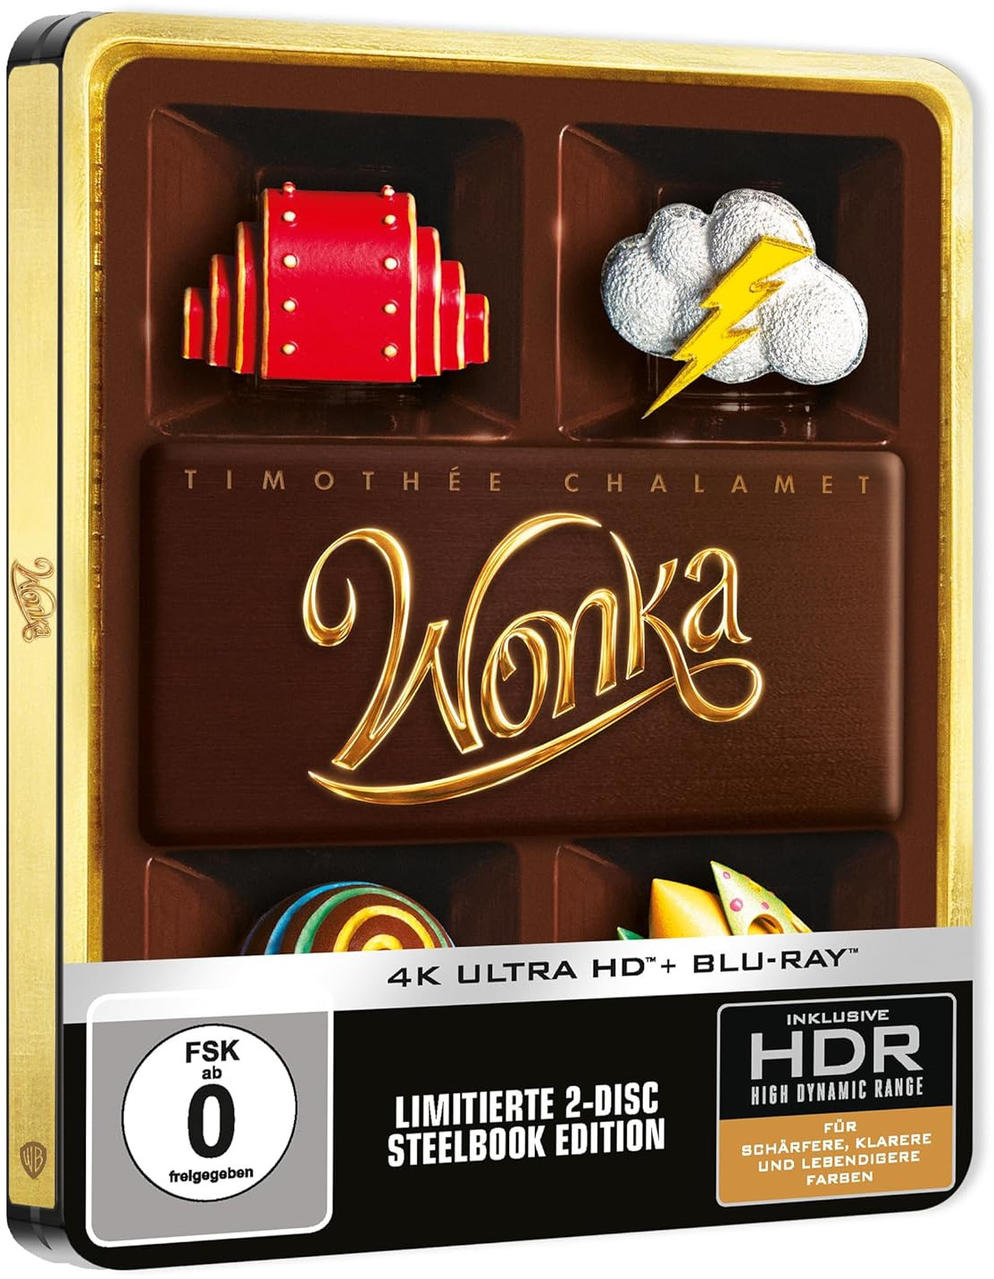 Blu-ray Wonka Steelbookedition Exklusive